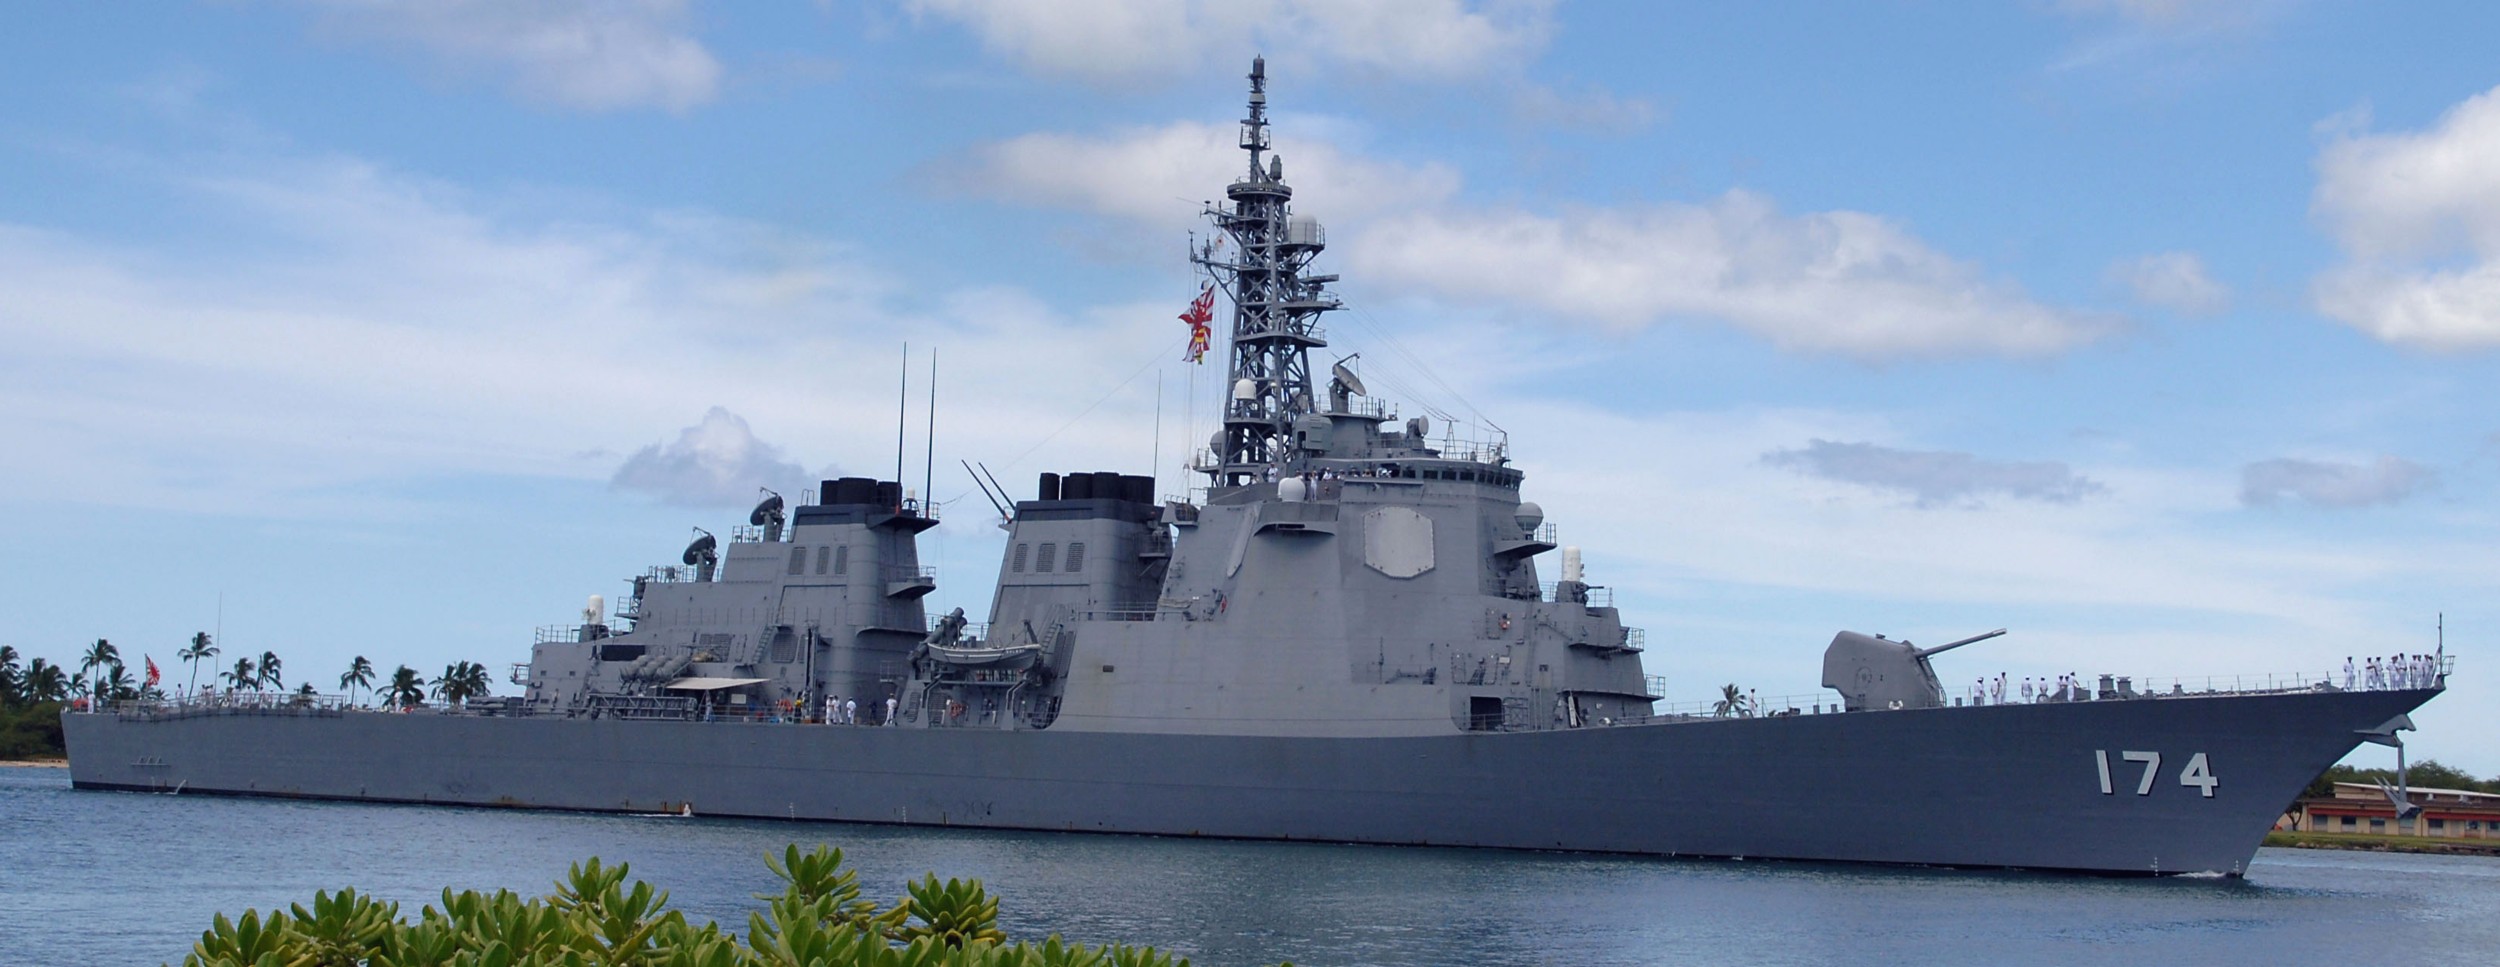 ddg-174 jds kirishima kongou class destroyer japan maritime self defense force jmsdf 24 pearl harbor hawaii